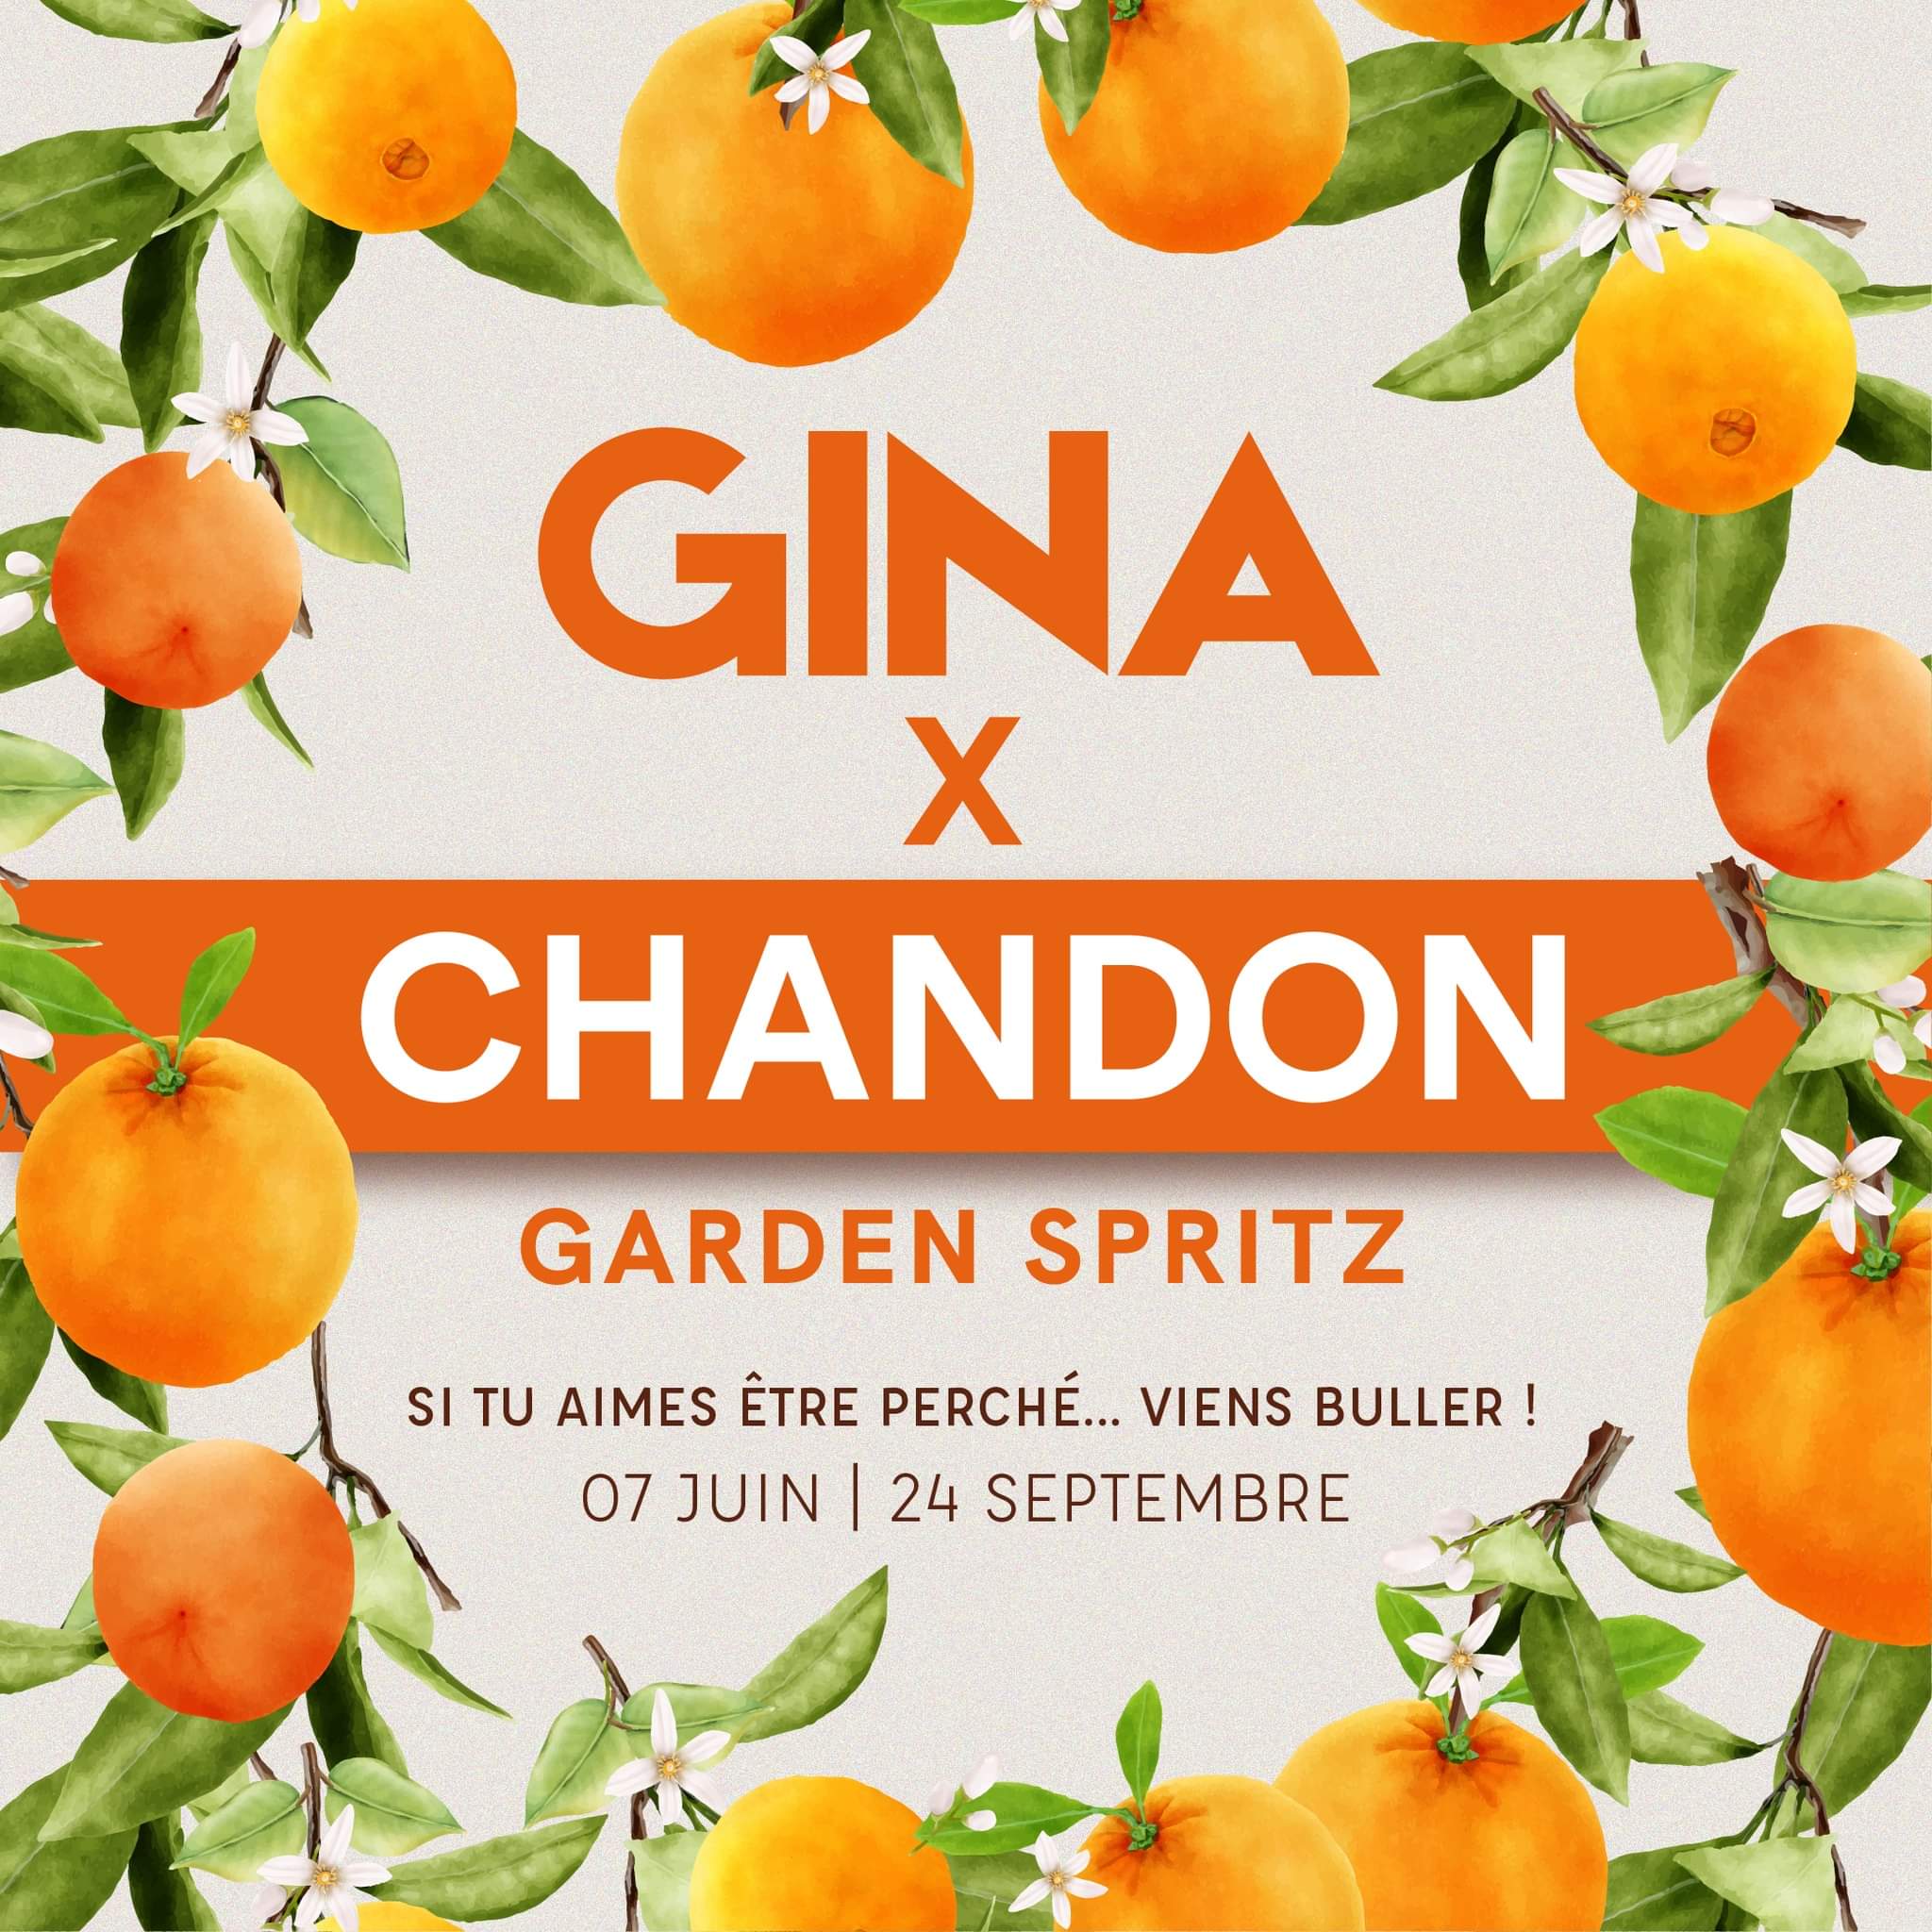 Gina x Chandon Garden Spritz